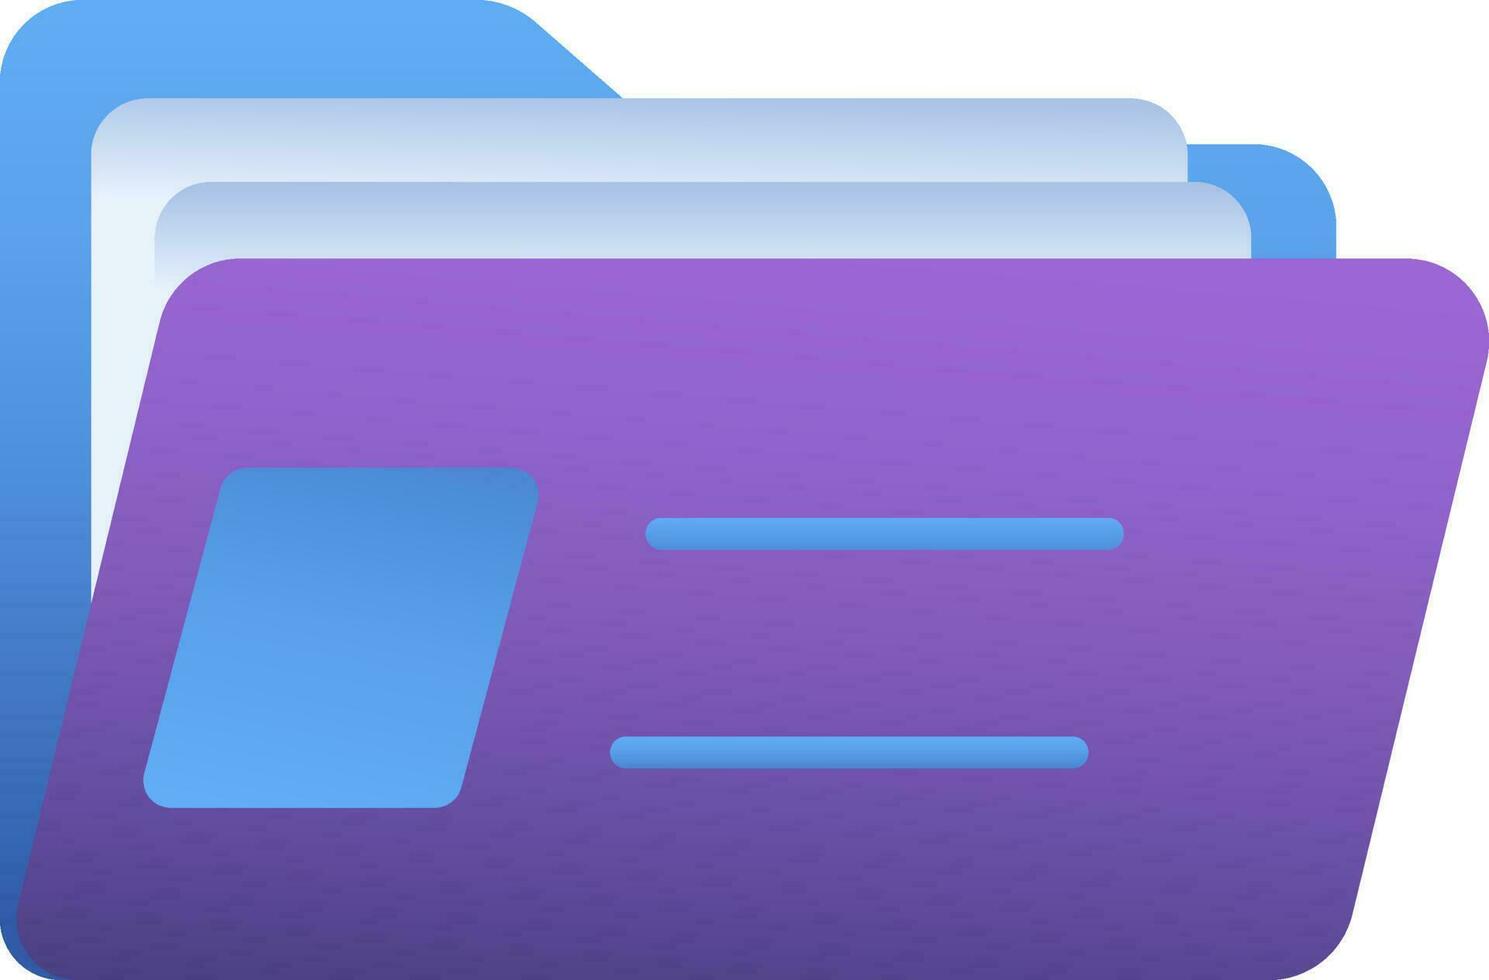 File Folder Icon In Purple And Blue Color. vector